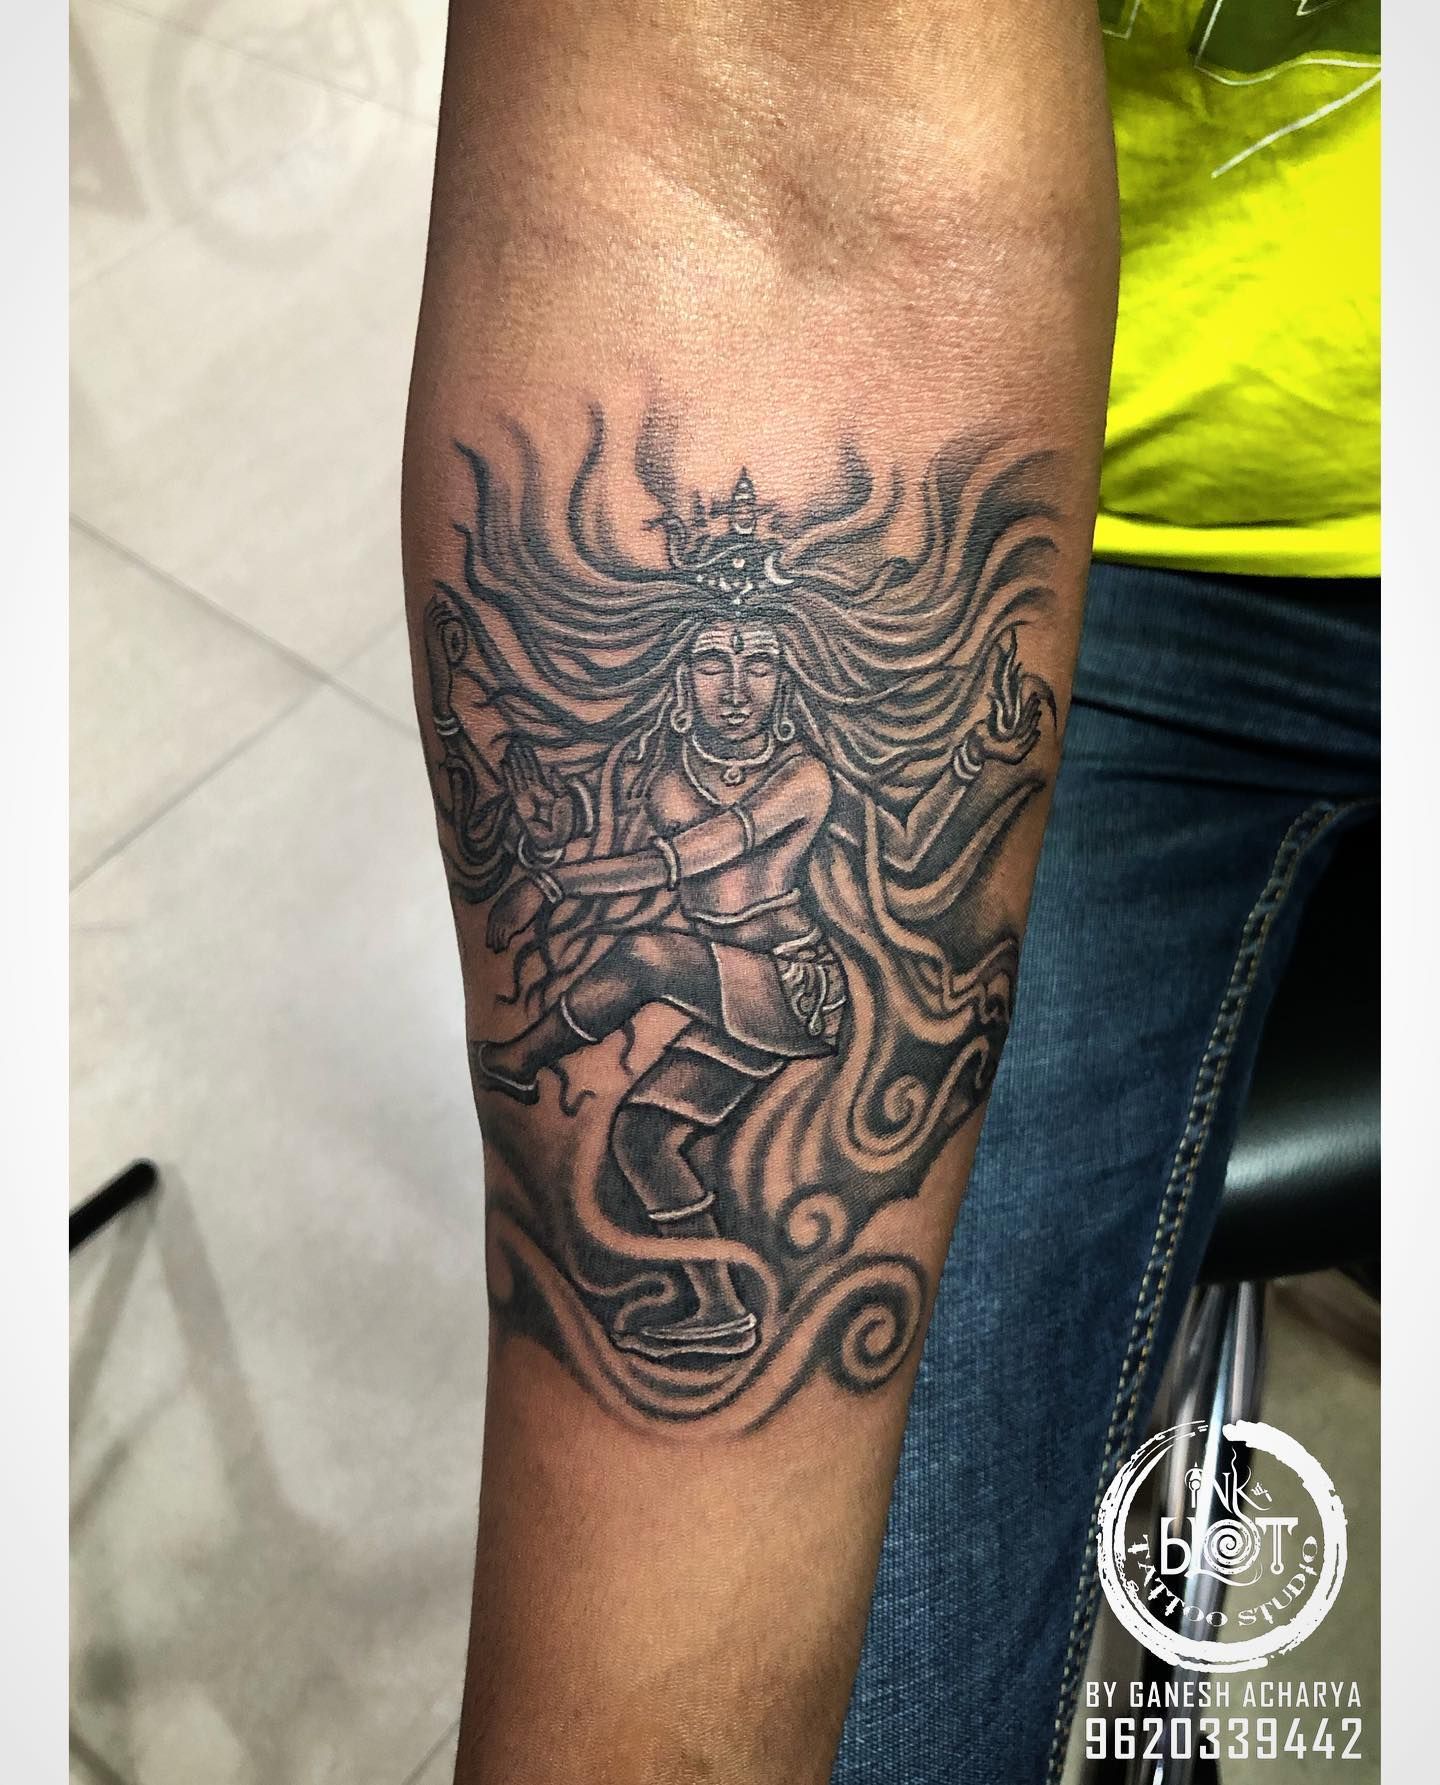 Tattoo uploaded by Samurai Tattoo mehsana • Mahadev tattoo |Shiva tattoo  |Bholenath tattoo |Shiva tattoo ideas |Smoking shiva tattoo • Tattoodo